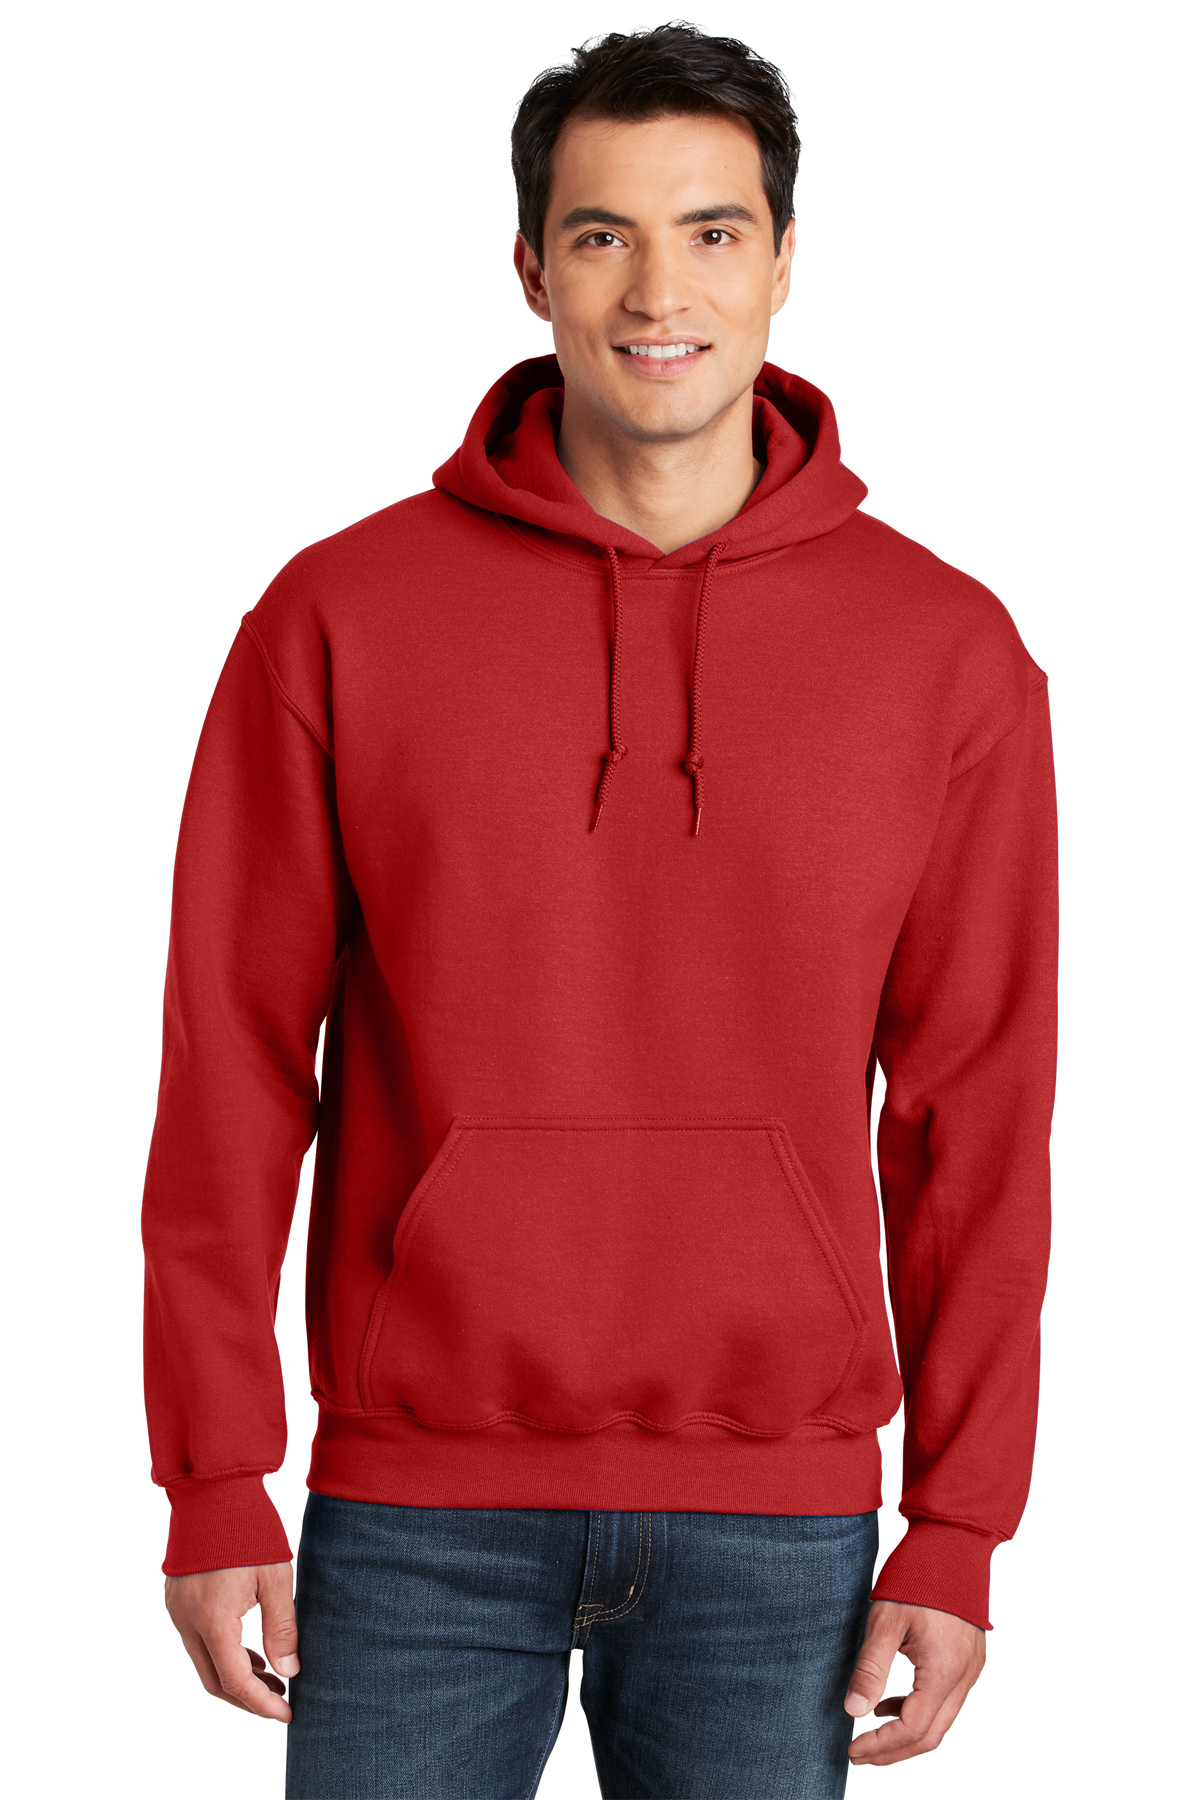 | SanMar Gildan Pullover | Product - DryBlend Sweatshirt Hooded